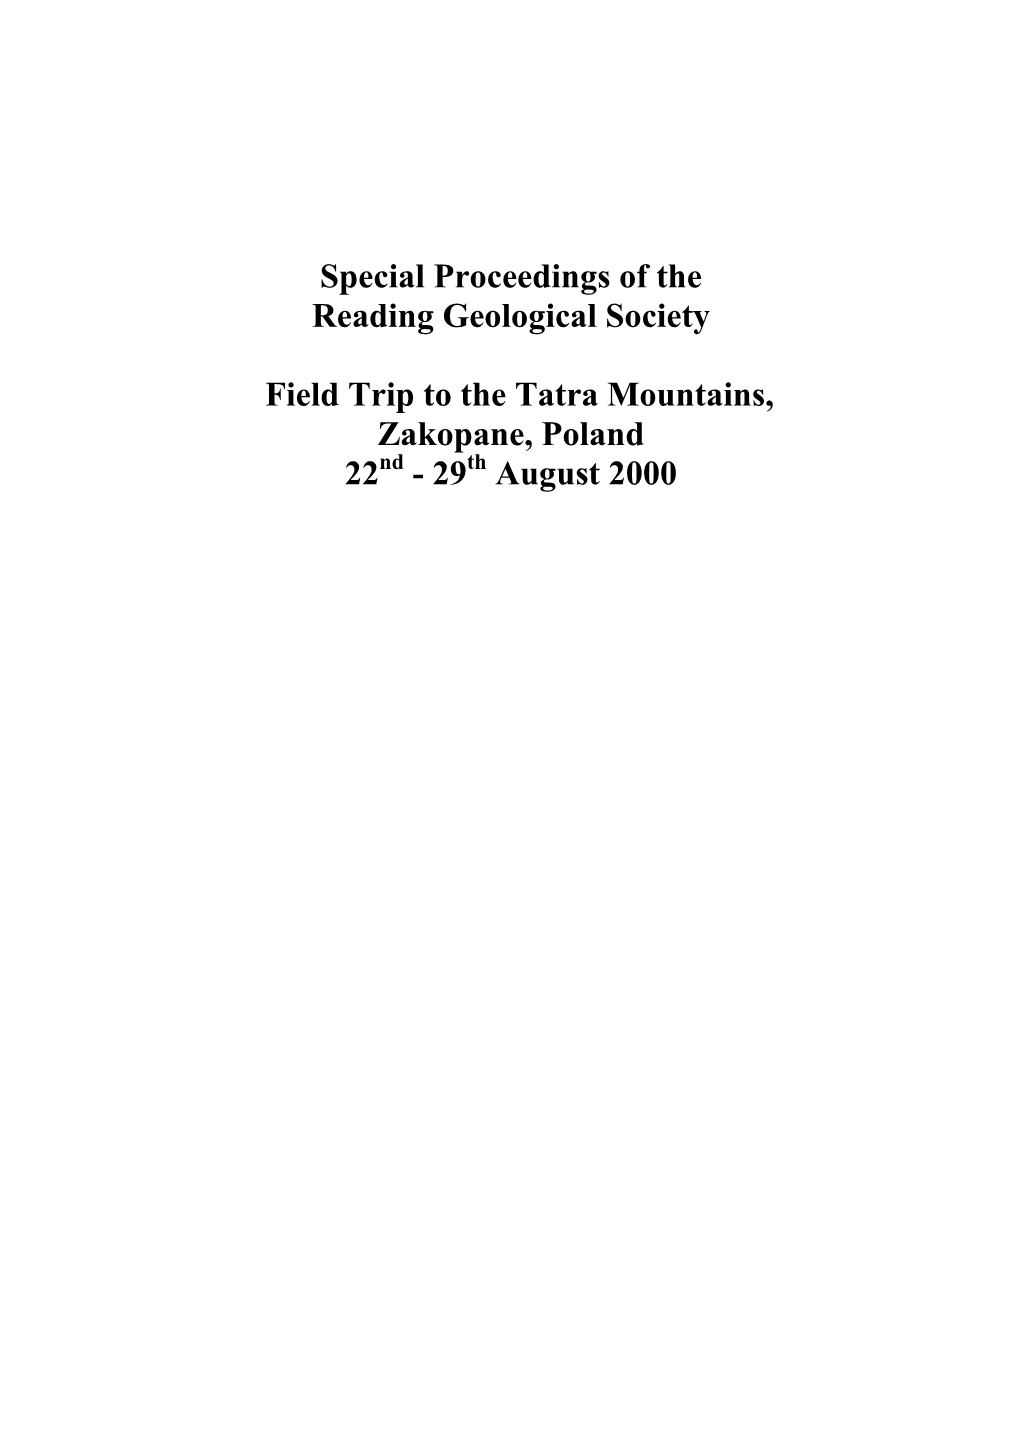 Proceedings Tatra